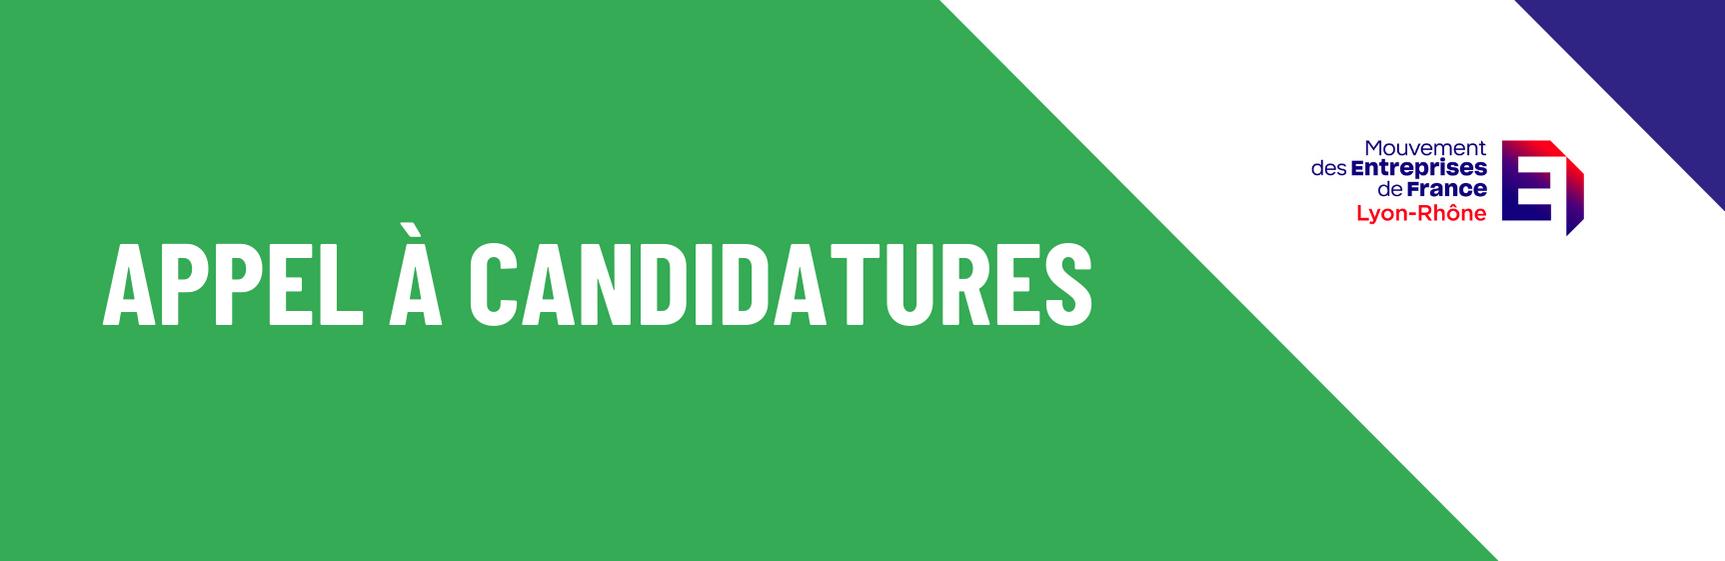 APPEL A CANDIDATURES Mandats MEDEF Lyon-Rhône